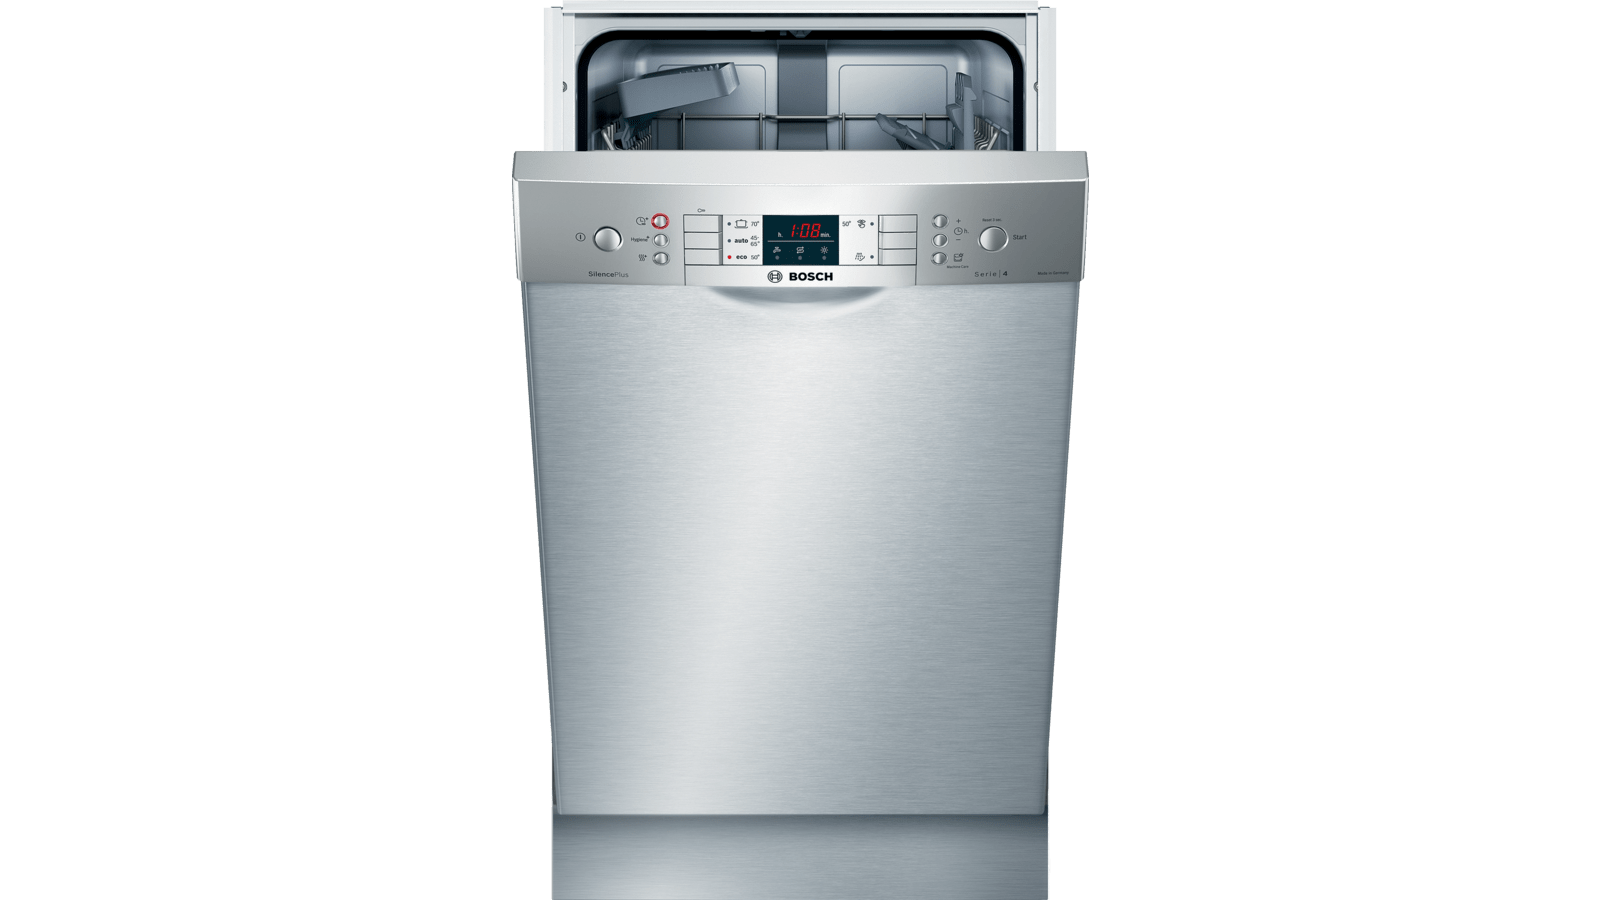 Моющую машинку посудомоечную. Посудомоечная машина Bosch sps66ti00e. Посудомоечная машина Siemens SR 256i01 te. Посудомоечная машина Bosch SPS 69t02. Посудомоечная машина Bosch 45 отдельностоящая.